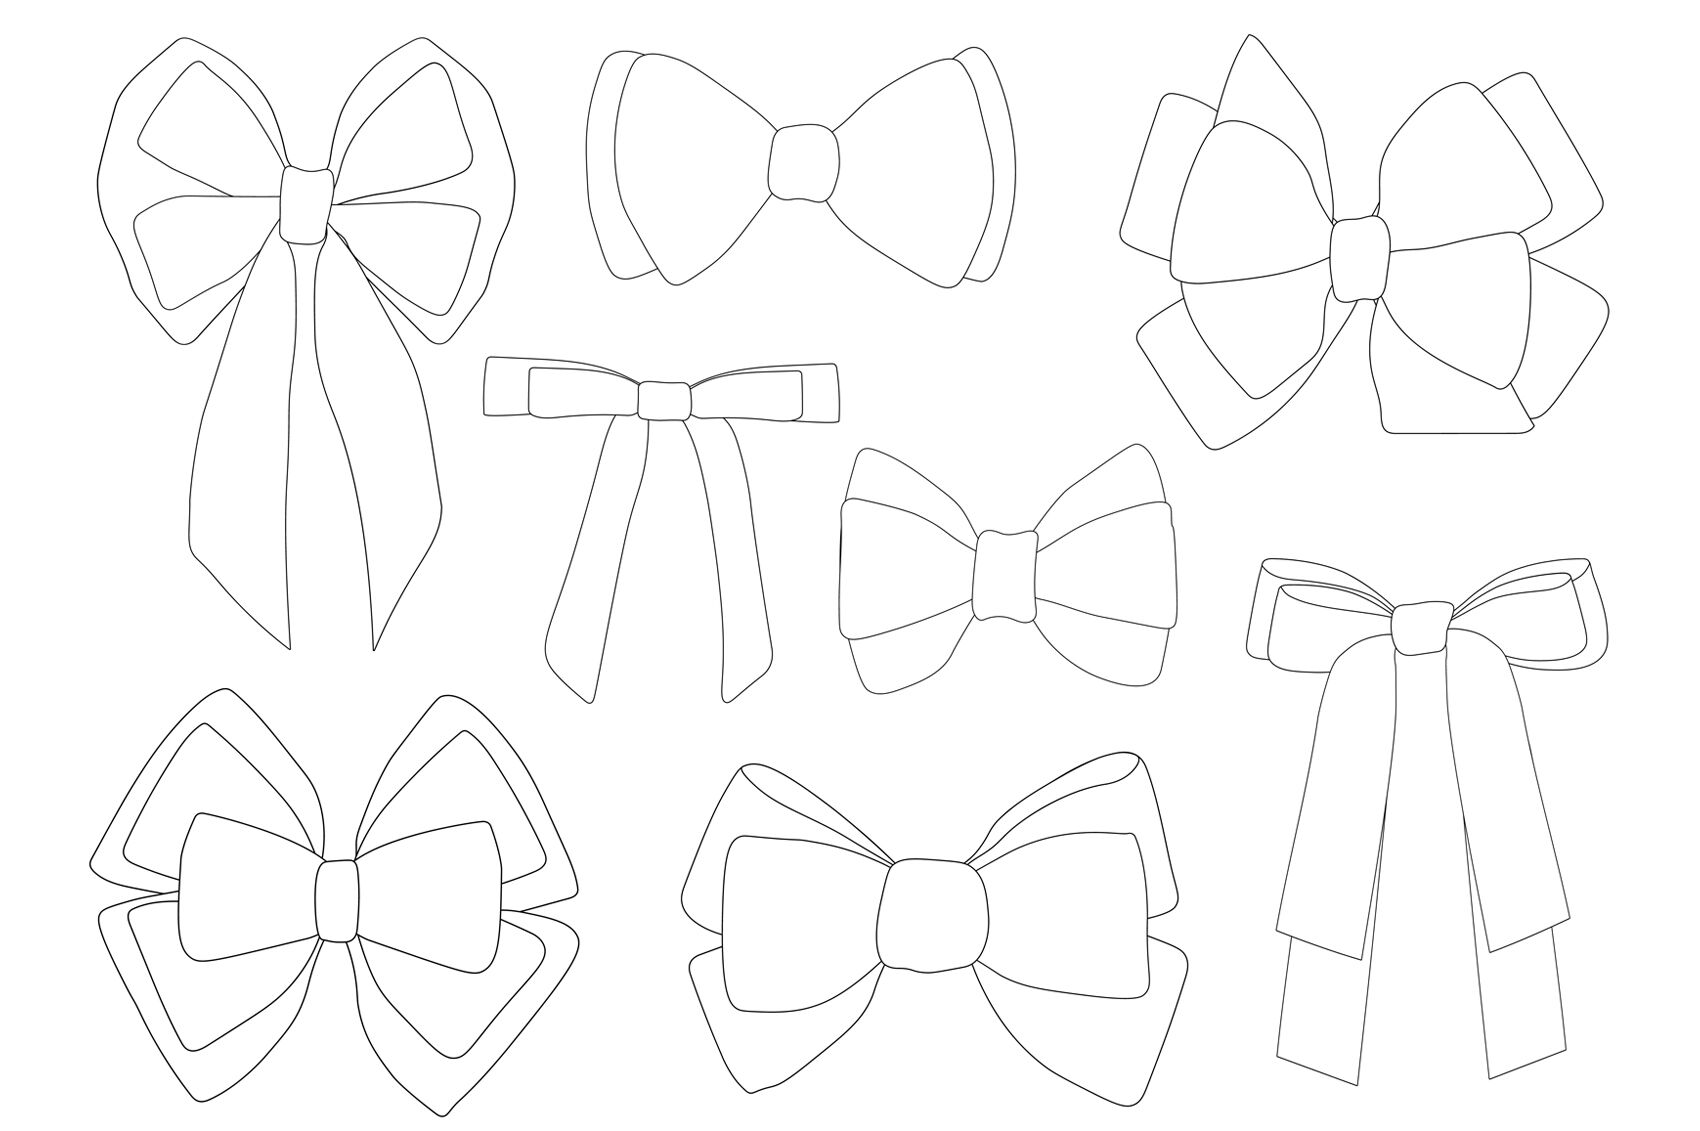 Bows graphics. Bows coloring. Bows SVG. Ribbons Bows graphic By ...